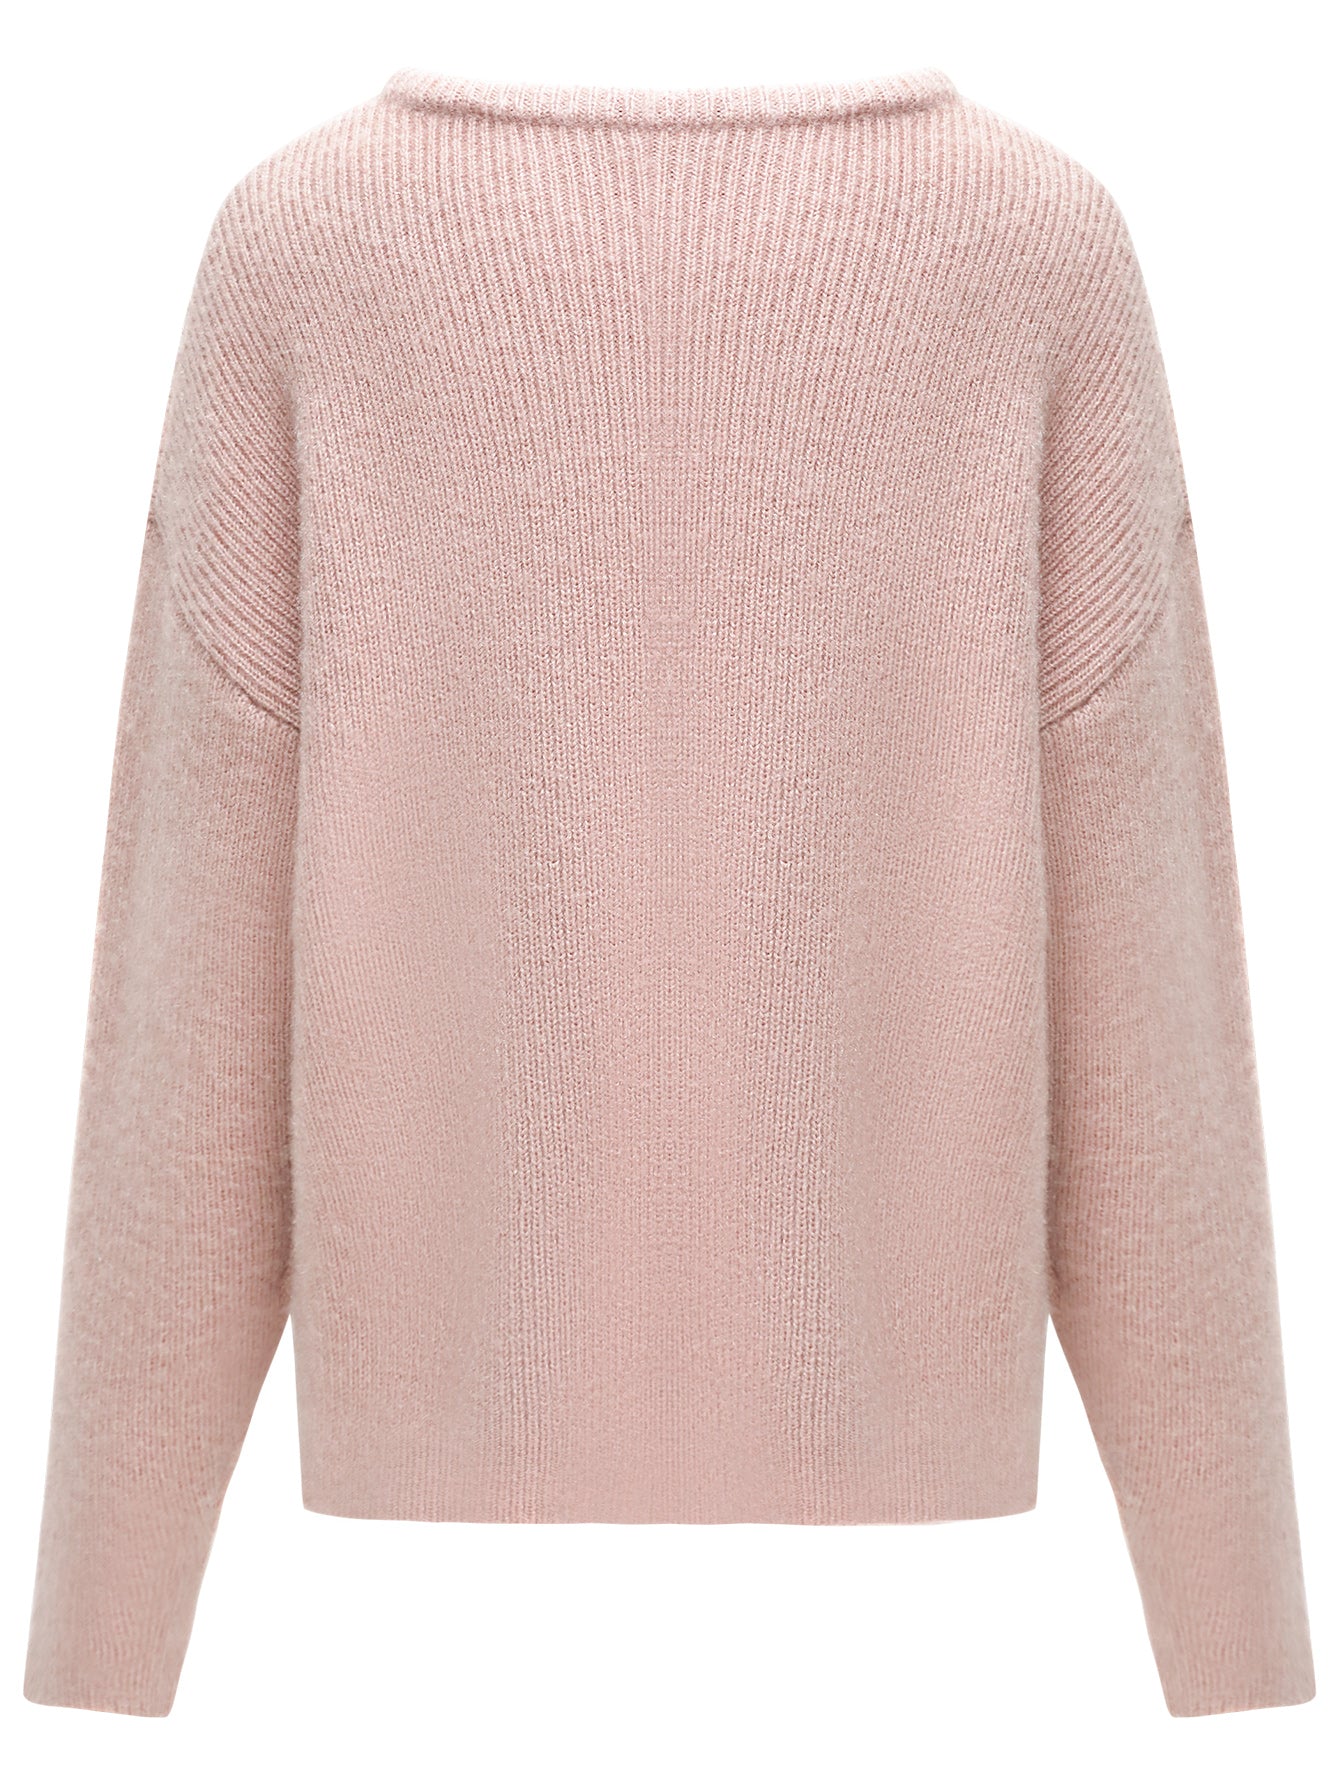 pink-velvet-knit-top_all_pink_5.jpg